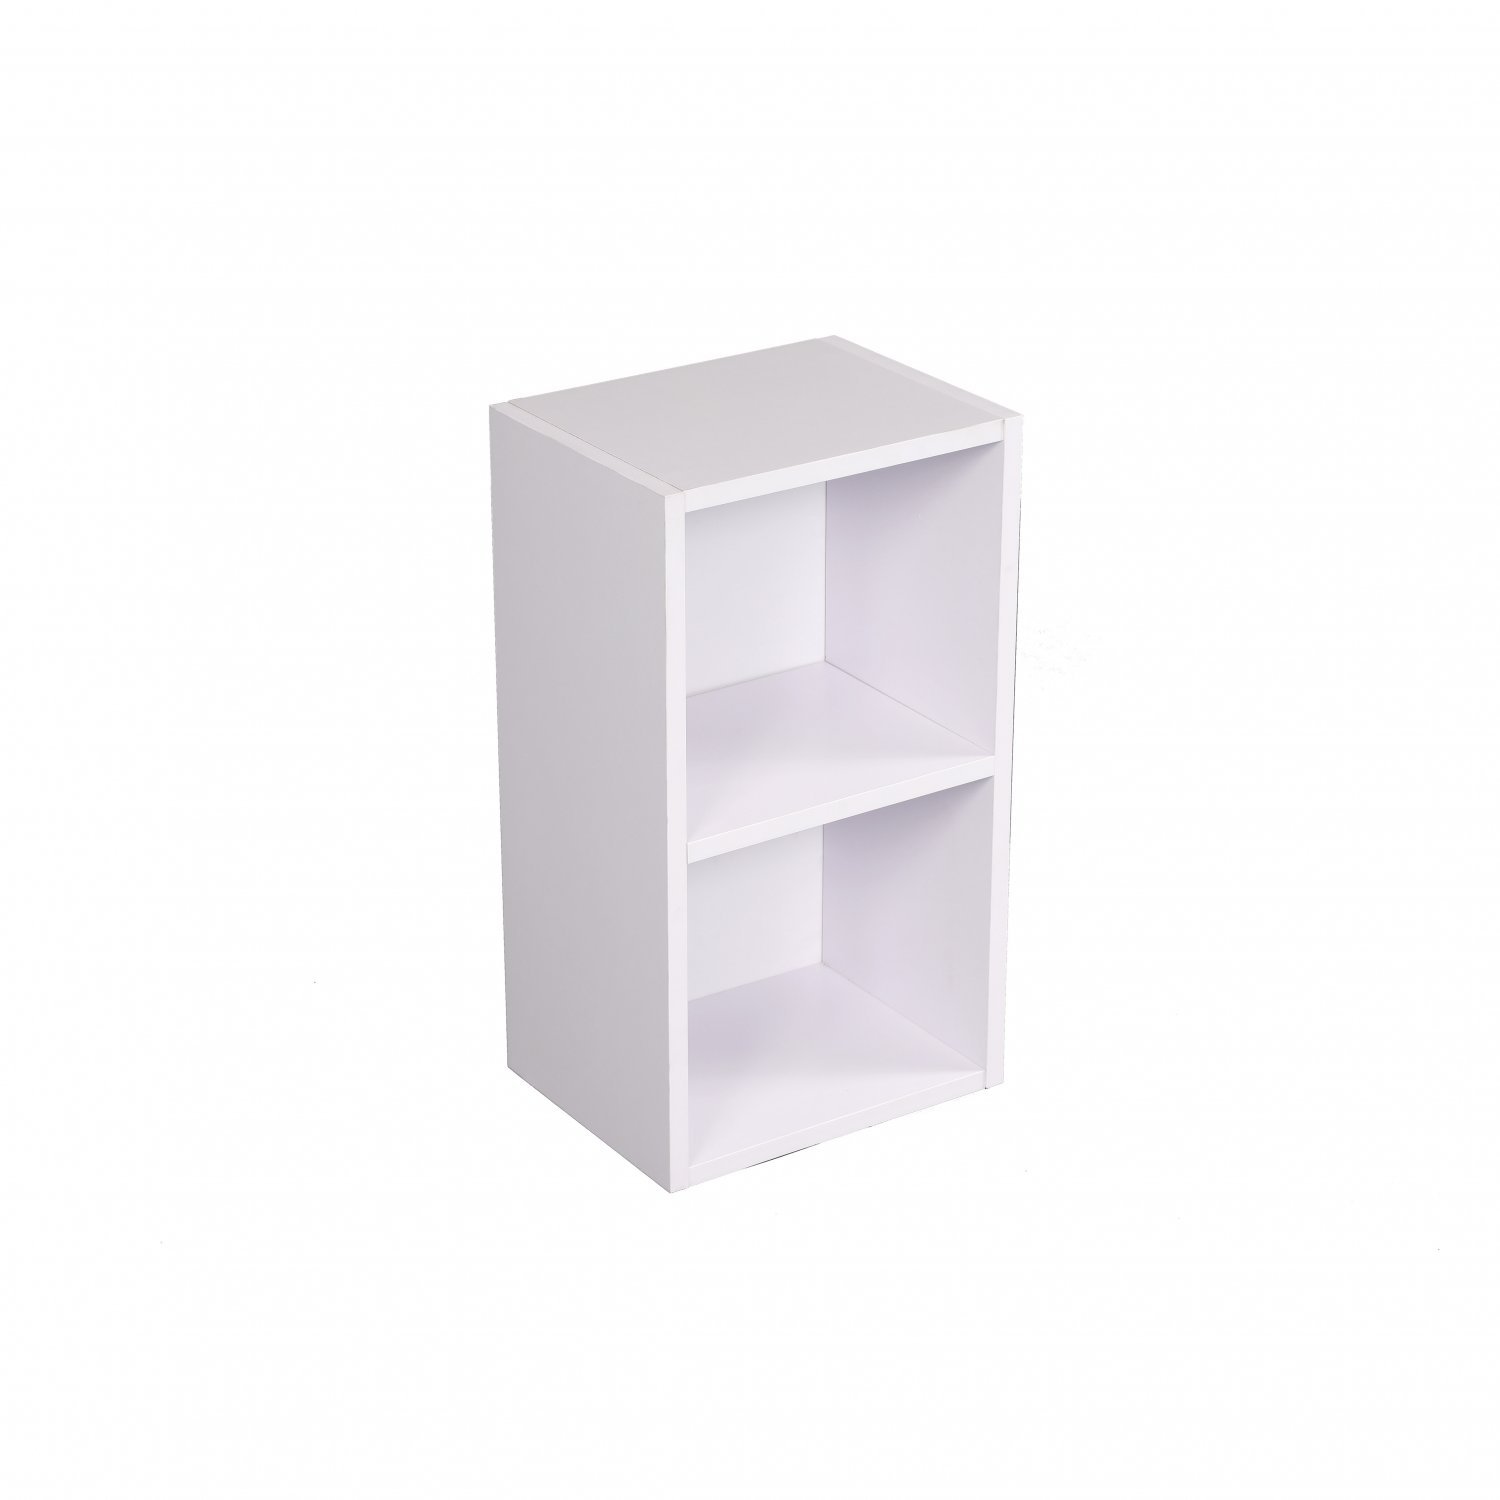 2 Tier Wooden Shelf White Bookcase Shelving Storage Display Rack